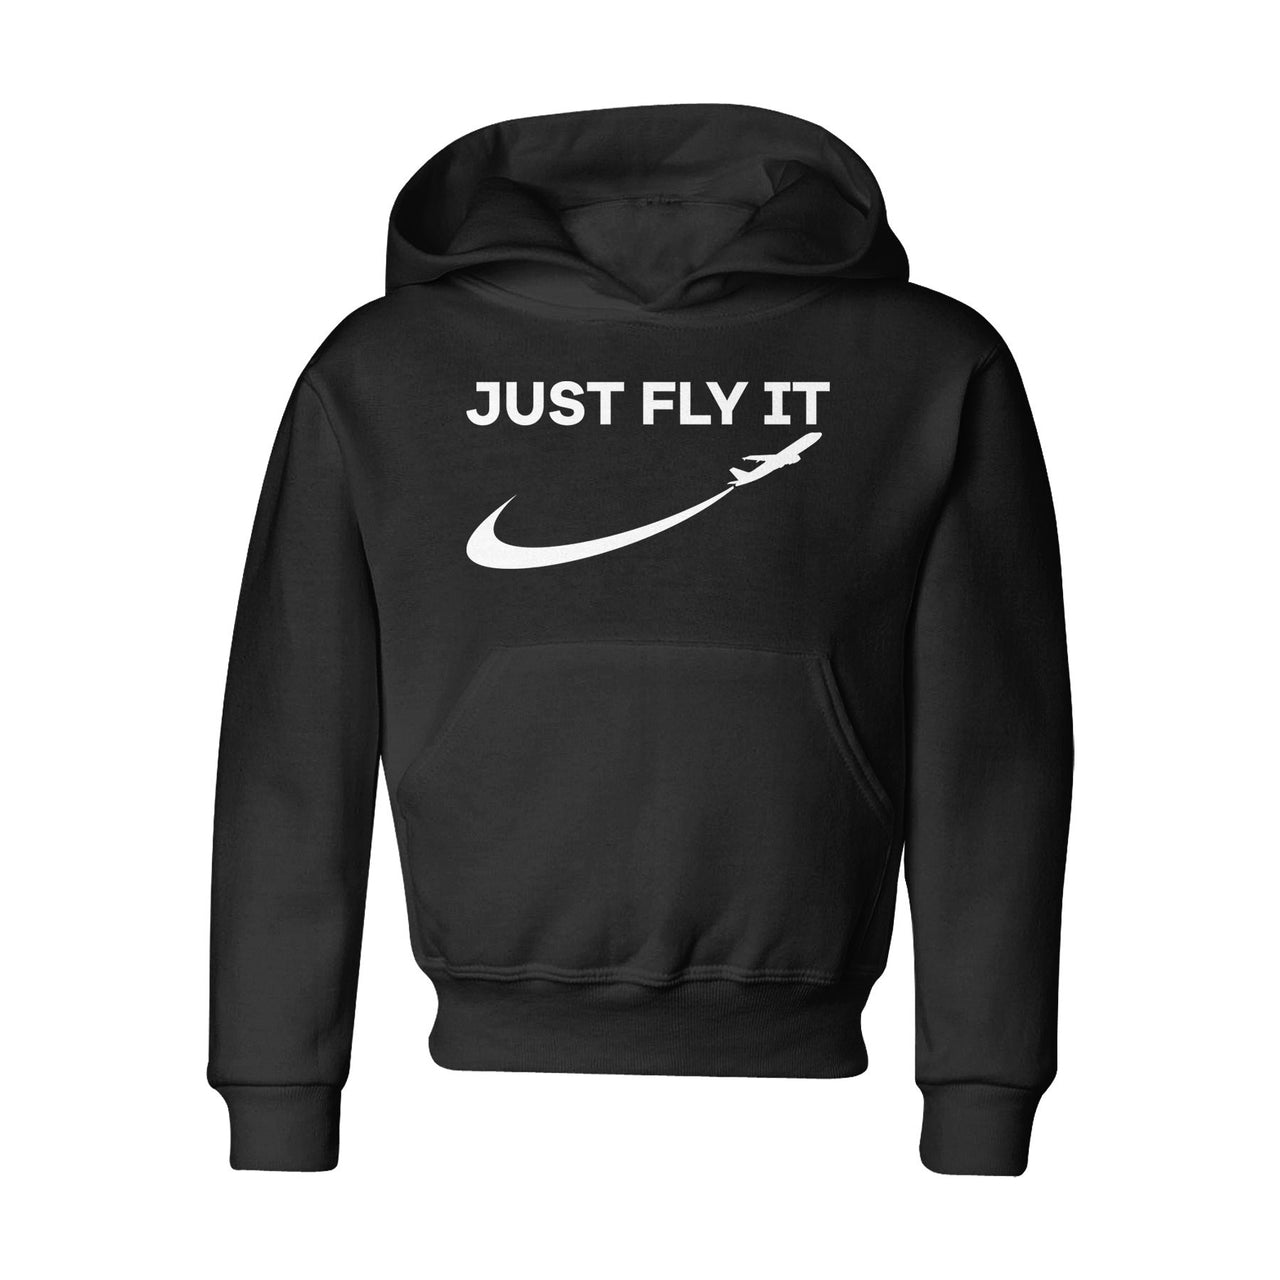 Just Fly It 2 Designed "CHILDREN" Hoodies